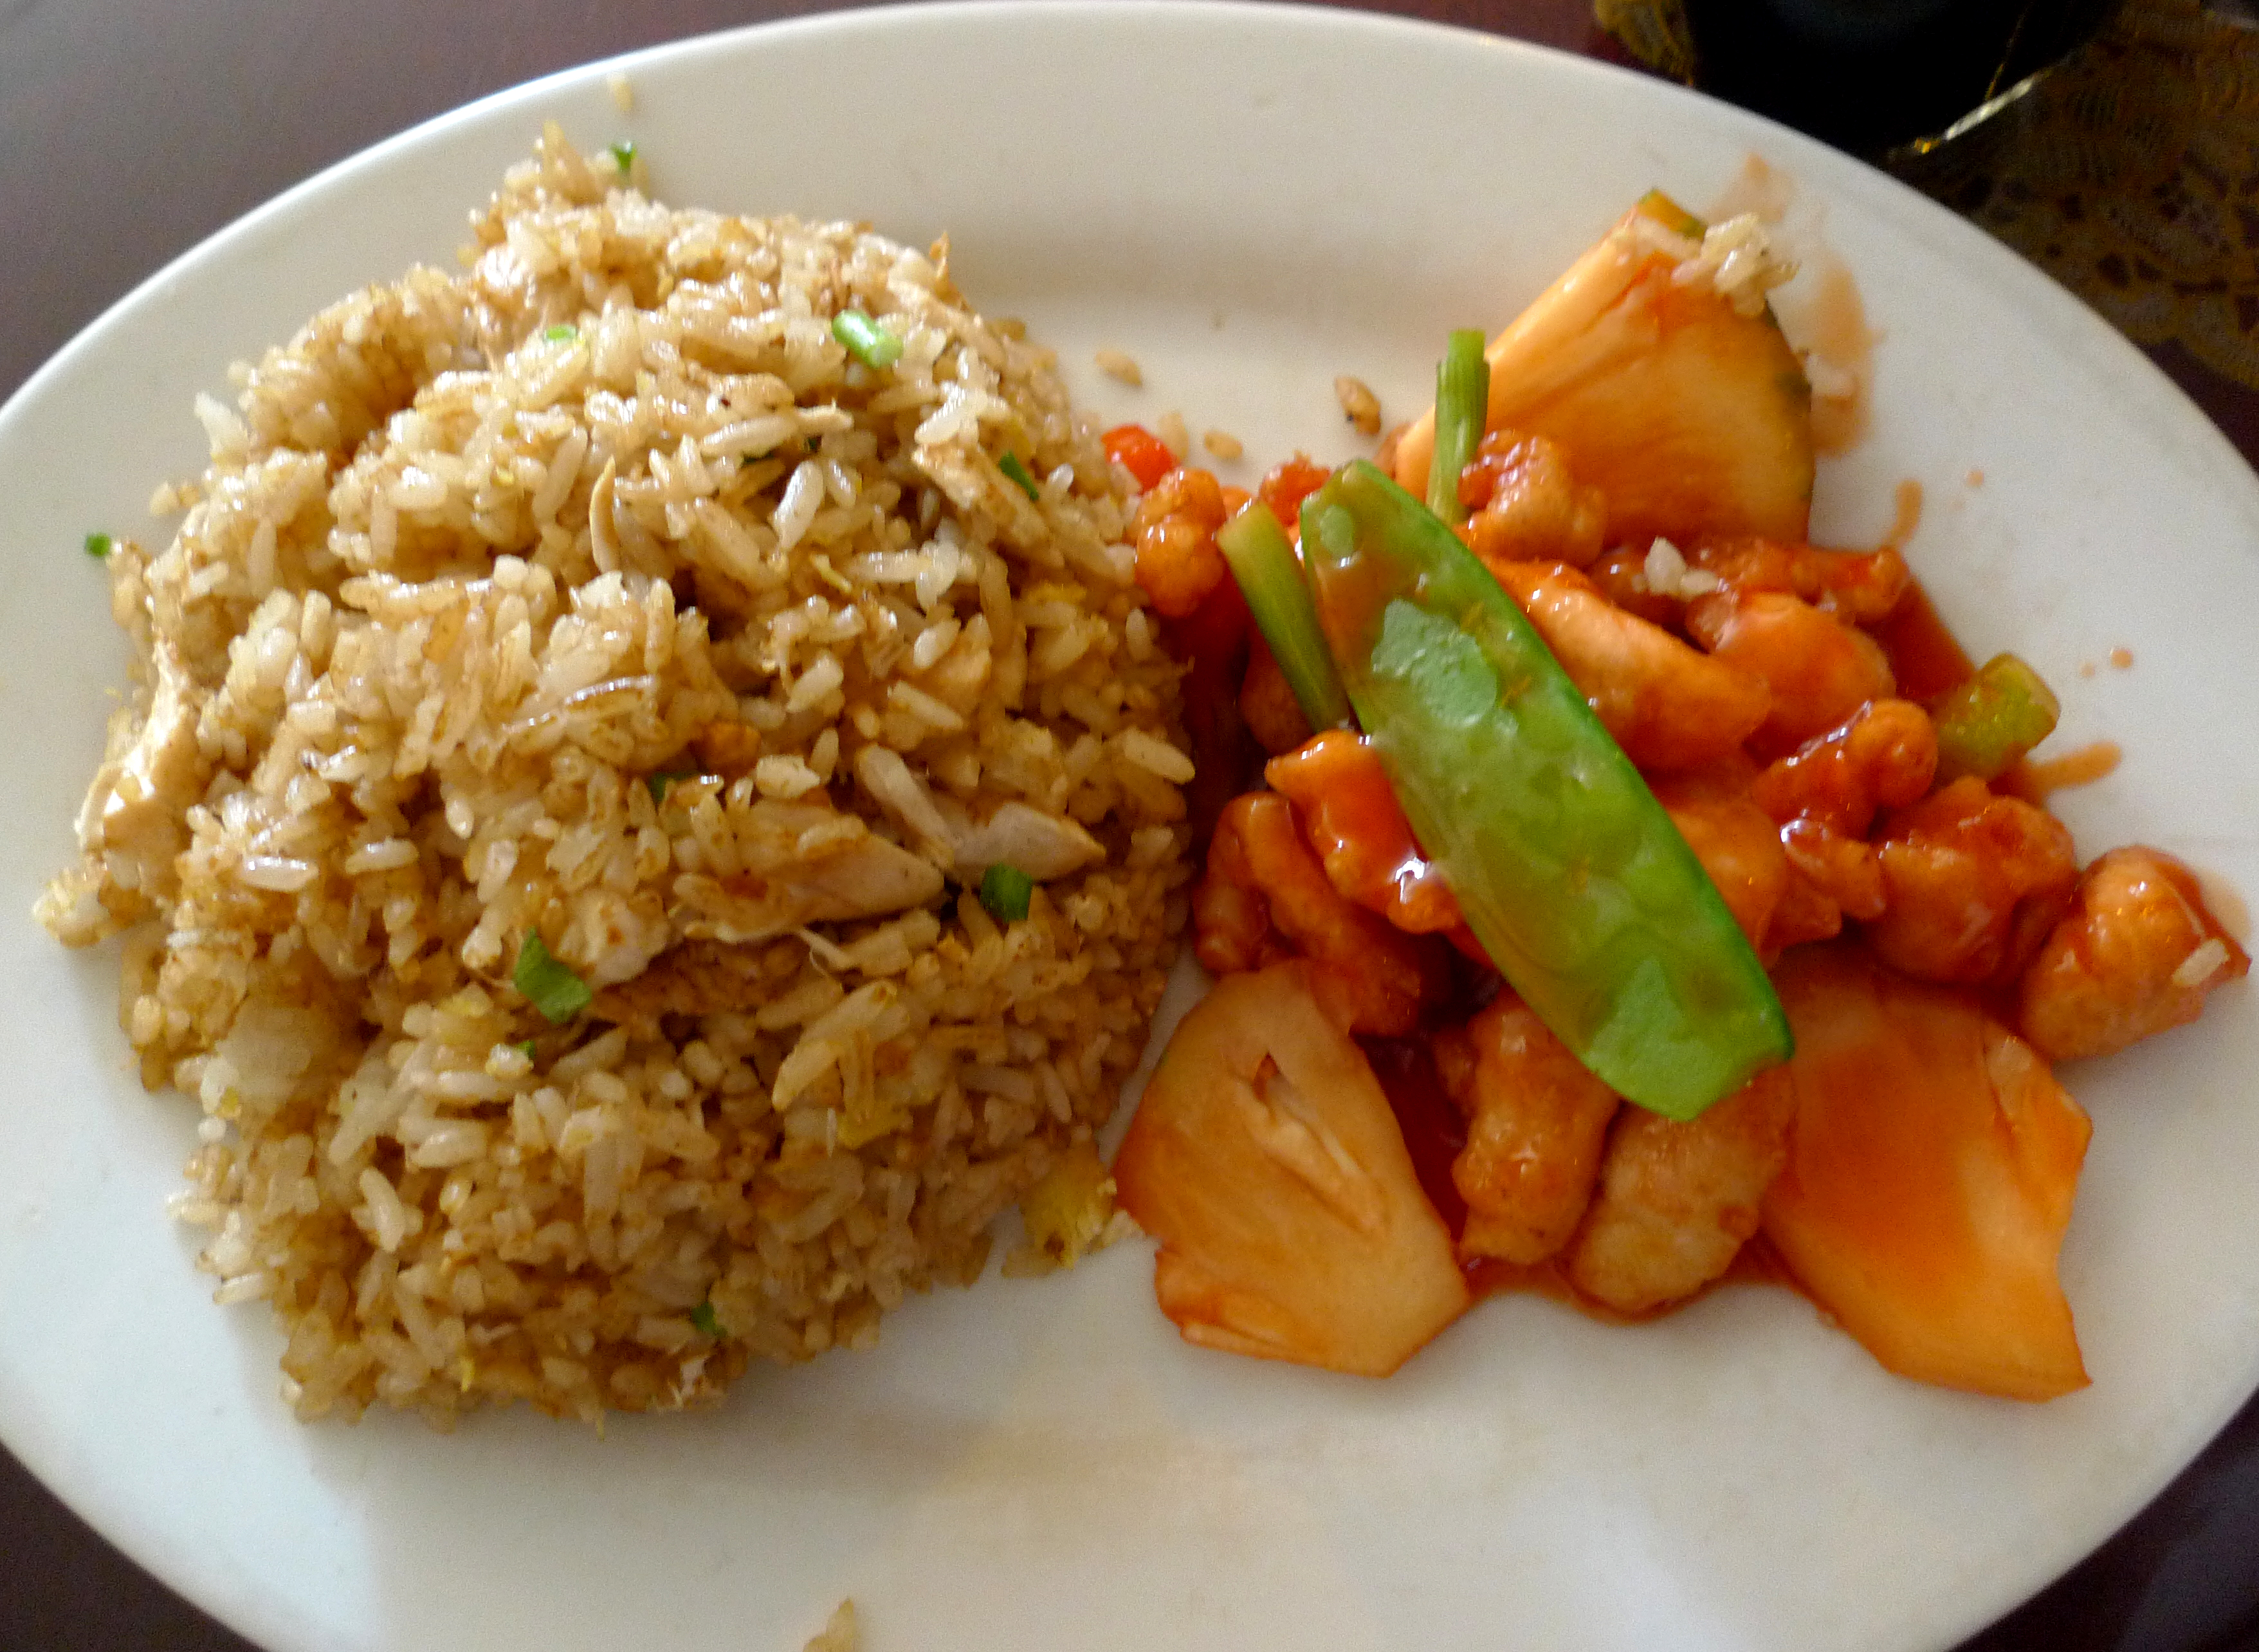  Chinese Food Wiki Chinese Food Menu Recipes Take OUt Box Near Meme